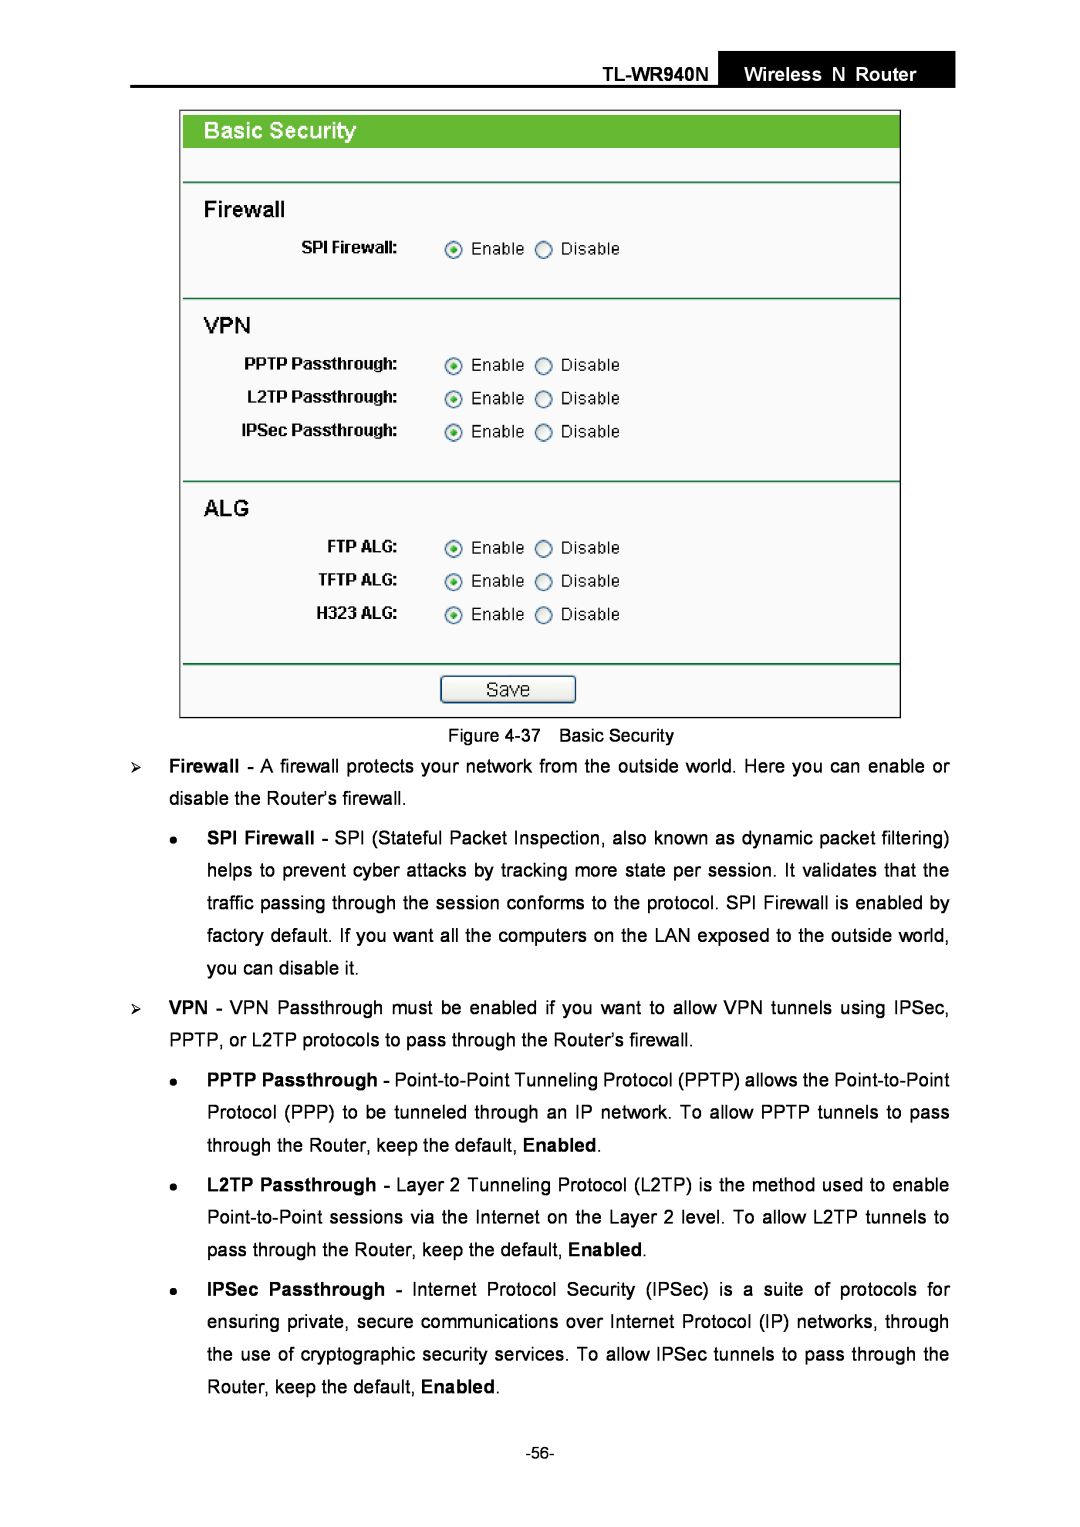 TP-Link manual TL-WR940N Wireless N Router, 37 Basic Security, z z z 